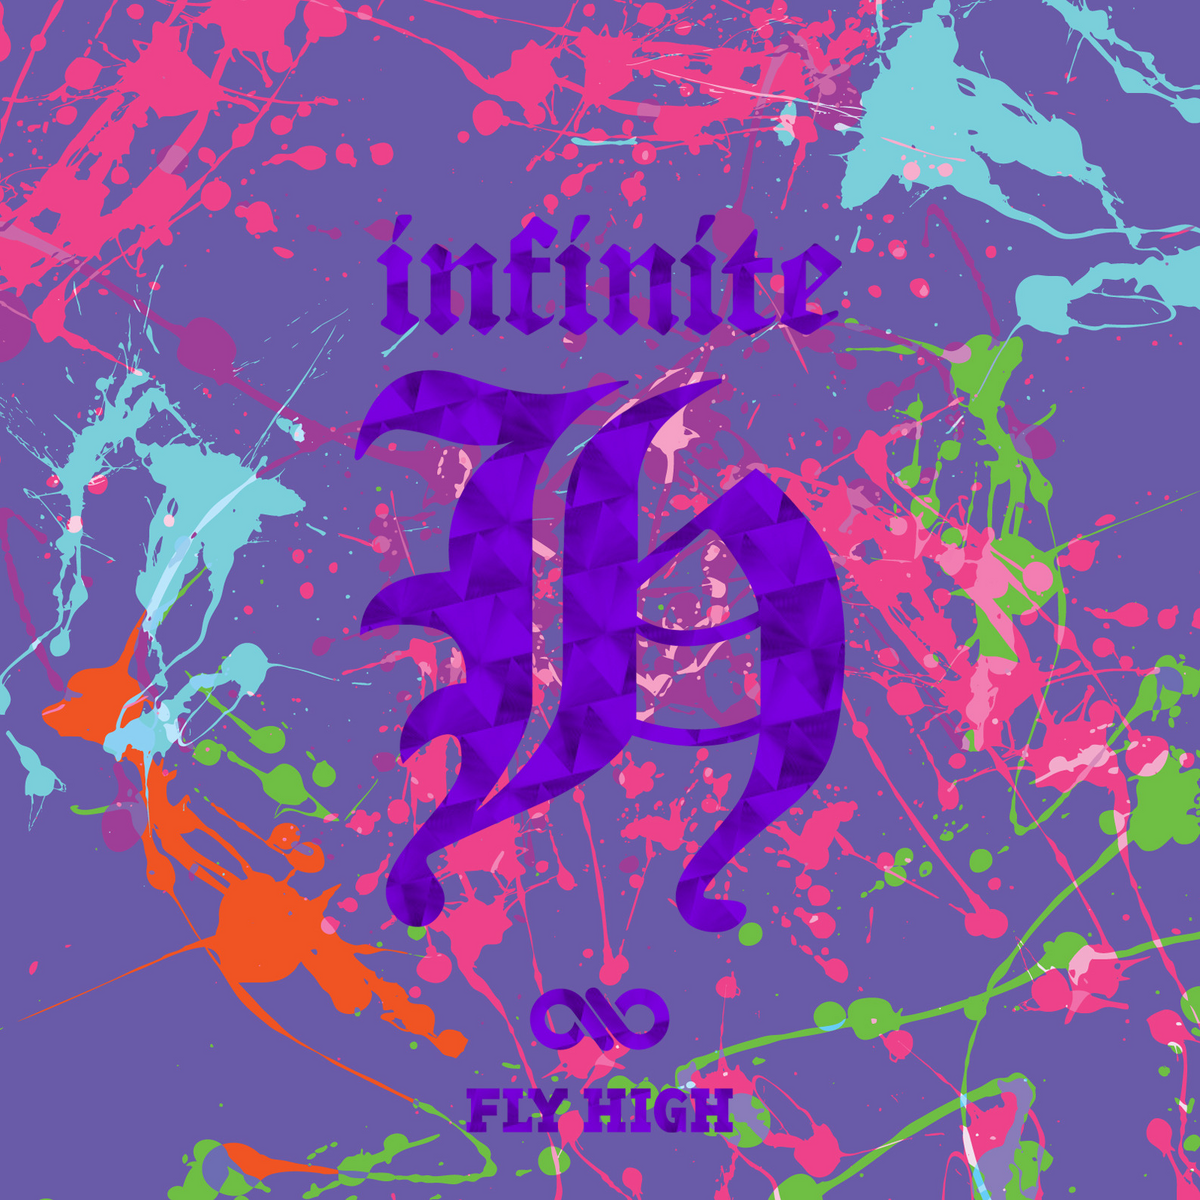 Flying higher and higher. Infinite kpop альбомы. Infinite Dilemma. Обложки корейских музыкальных альбомов. Infinite альбомы и карты.